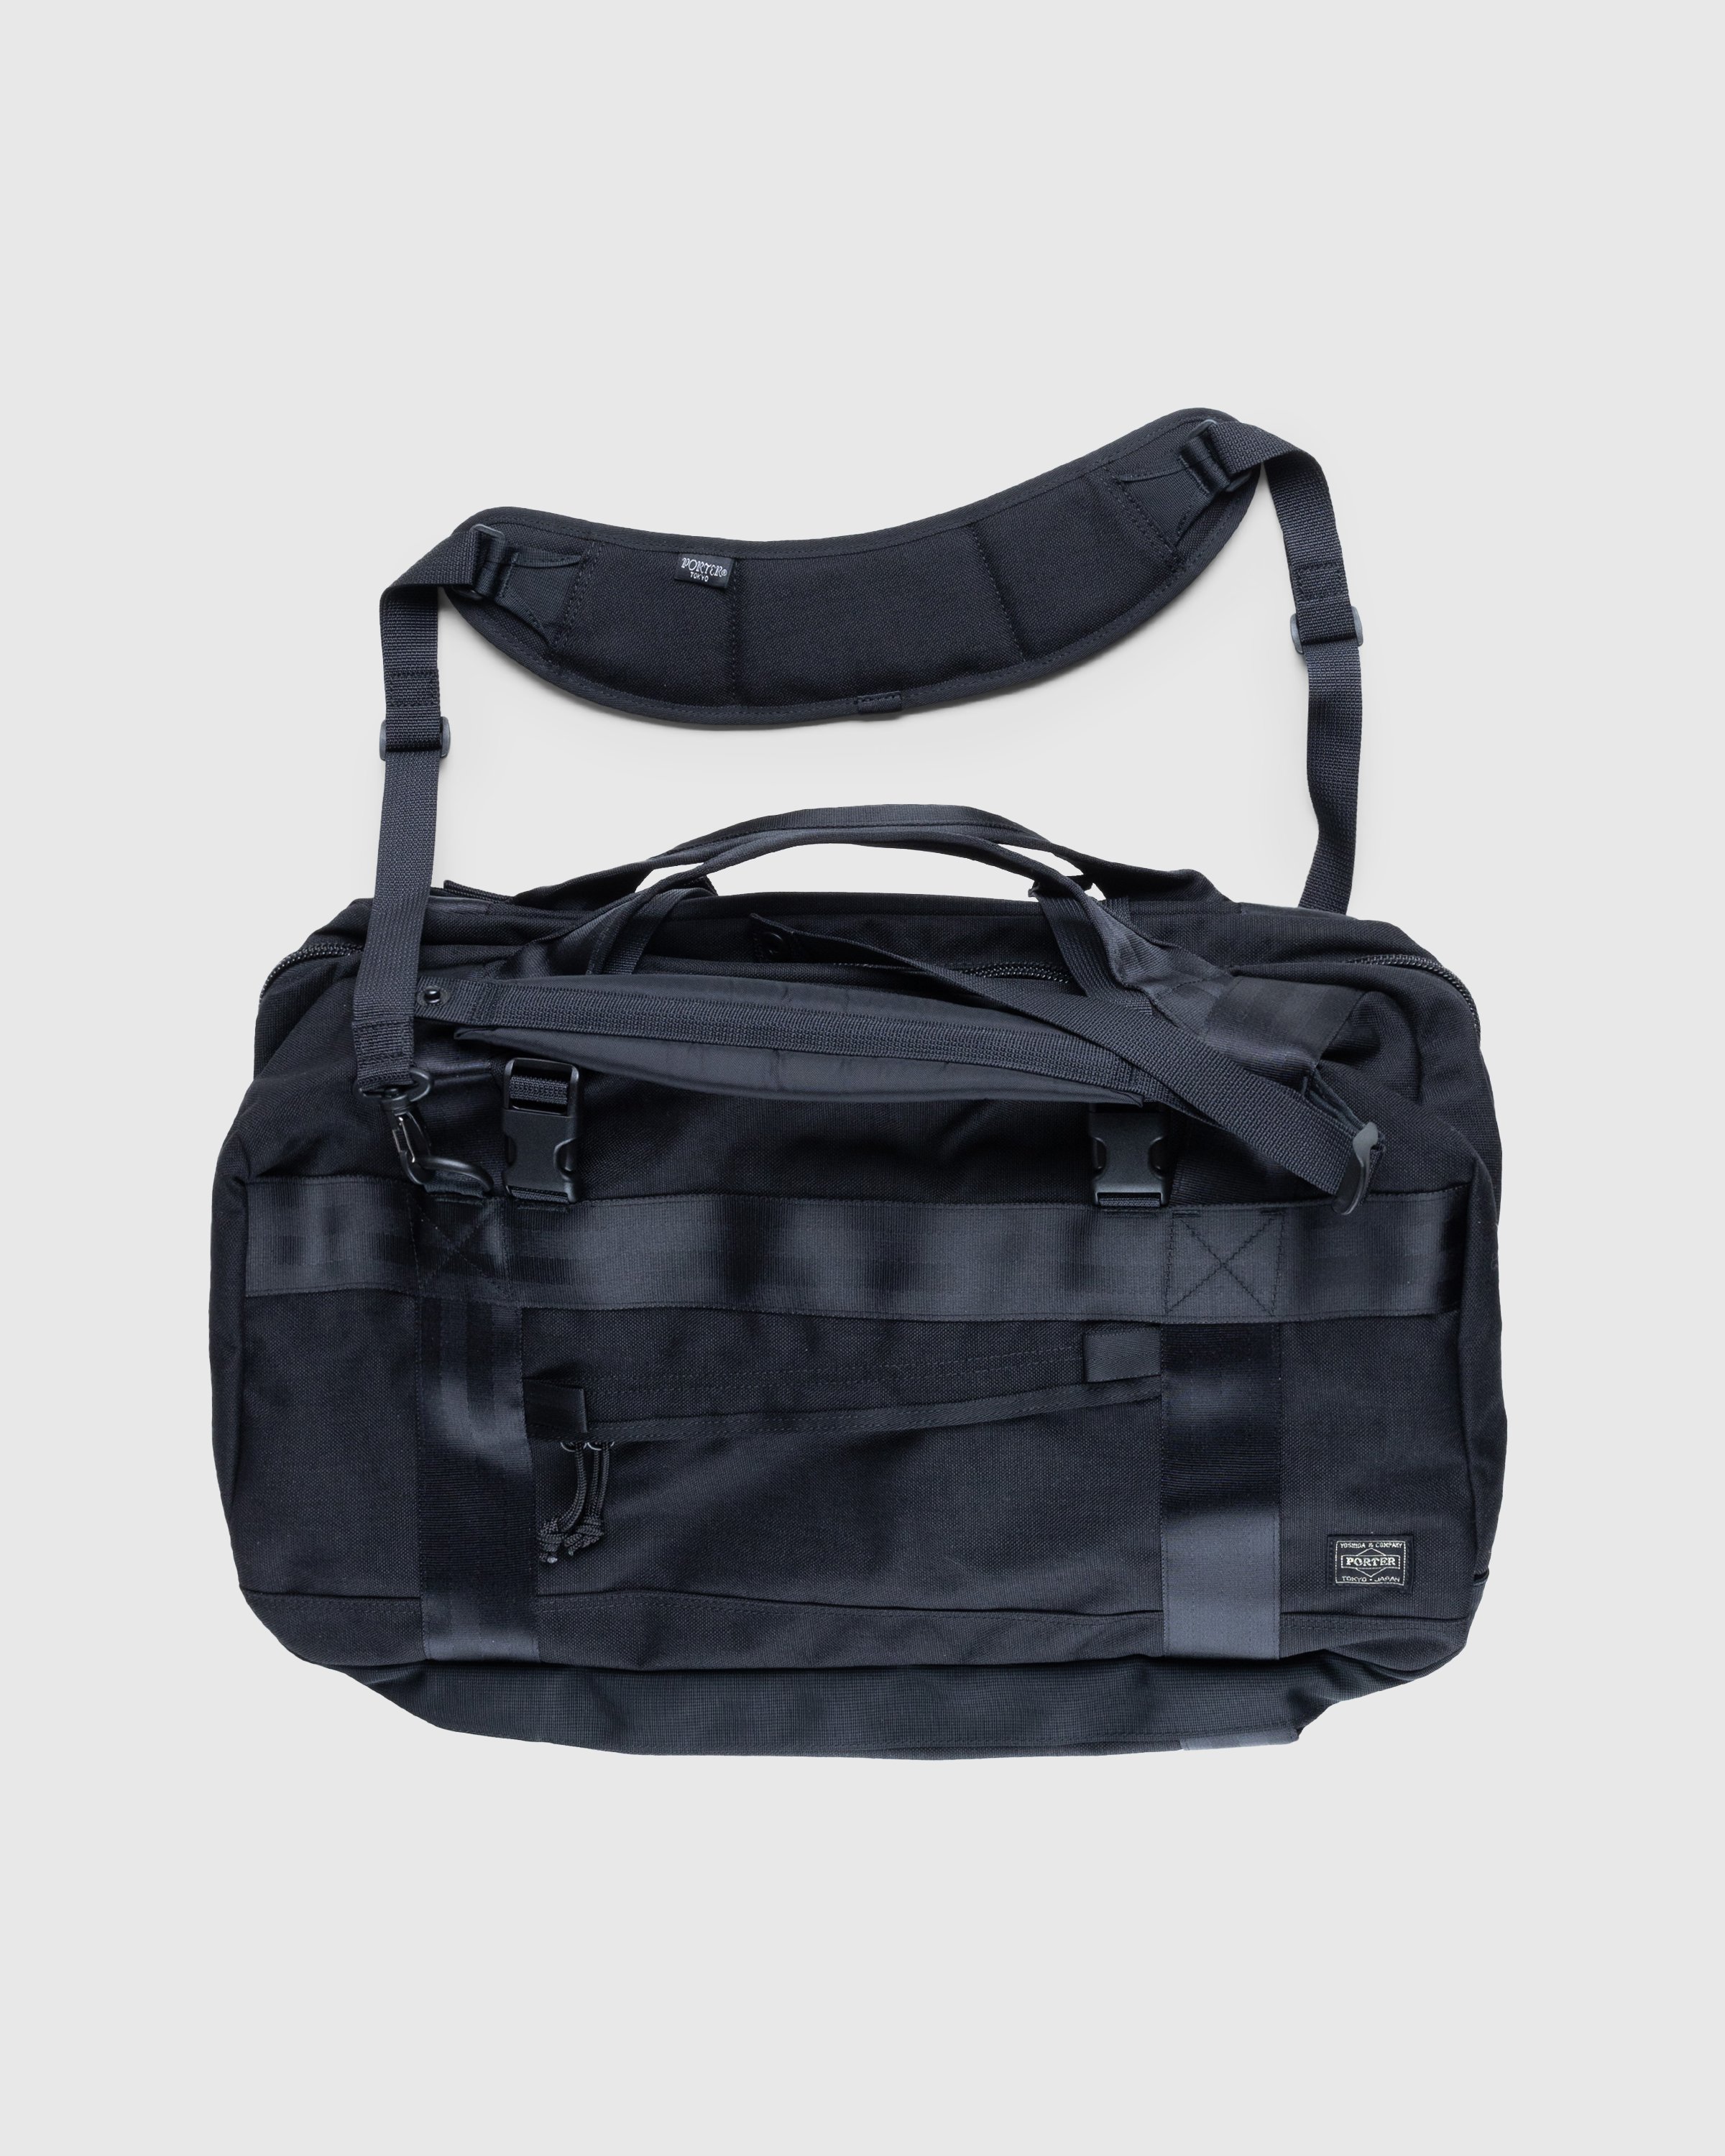 Porter-Yoshida & Co. - Booth Pack 3-Way Duffle Bag Black - Accessories - Black - Image 1